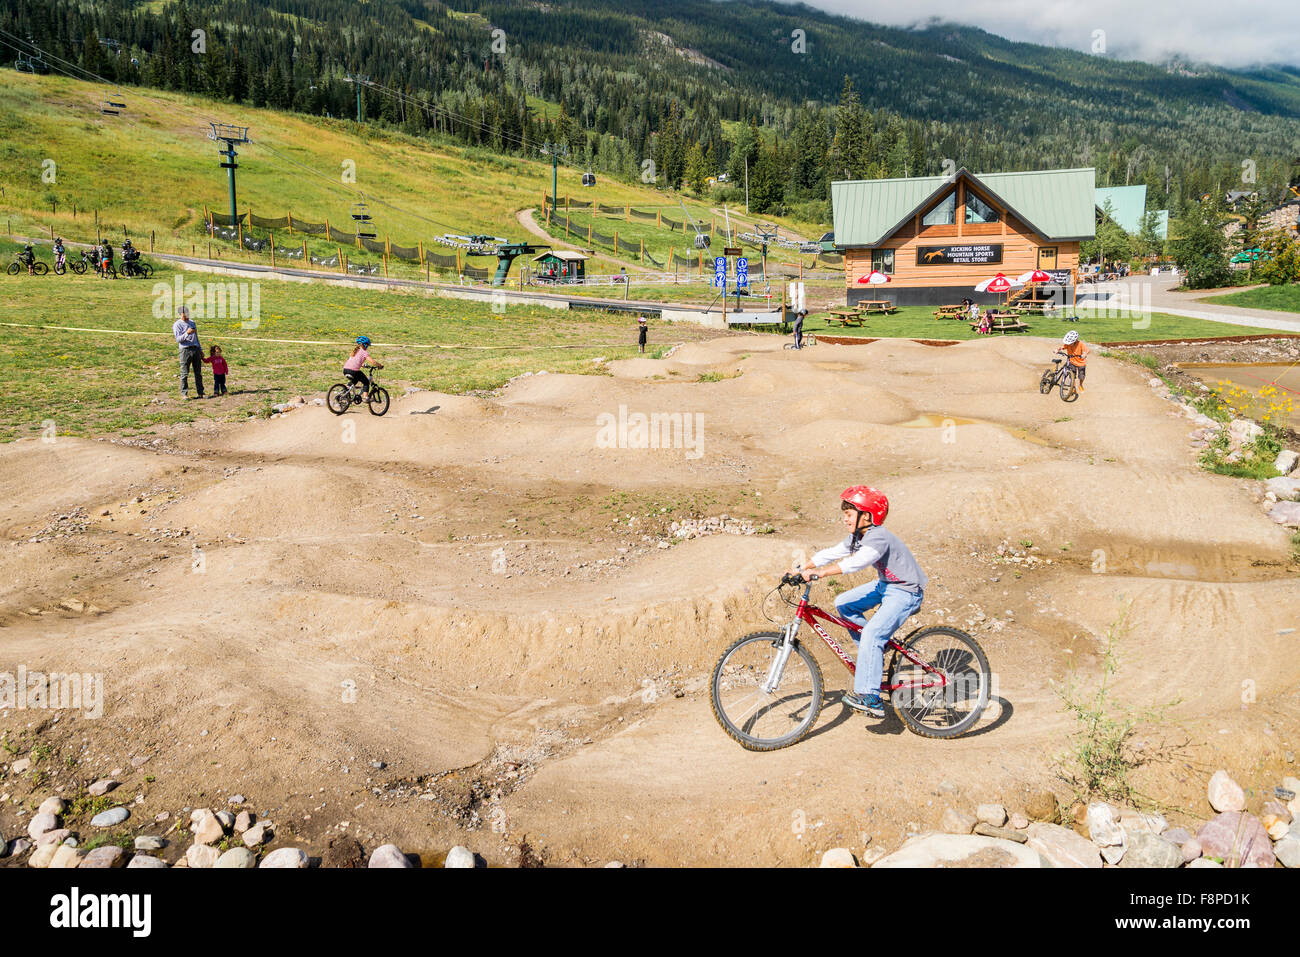 Kids Mountain bike course, Kicking Horse Resort, near Golden, British Columbia, Canada Stock Photo